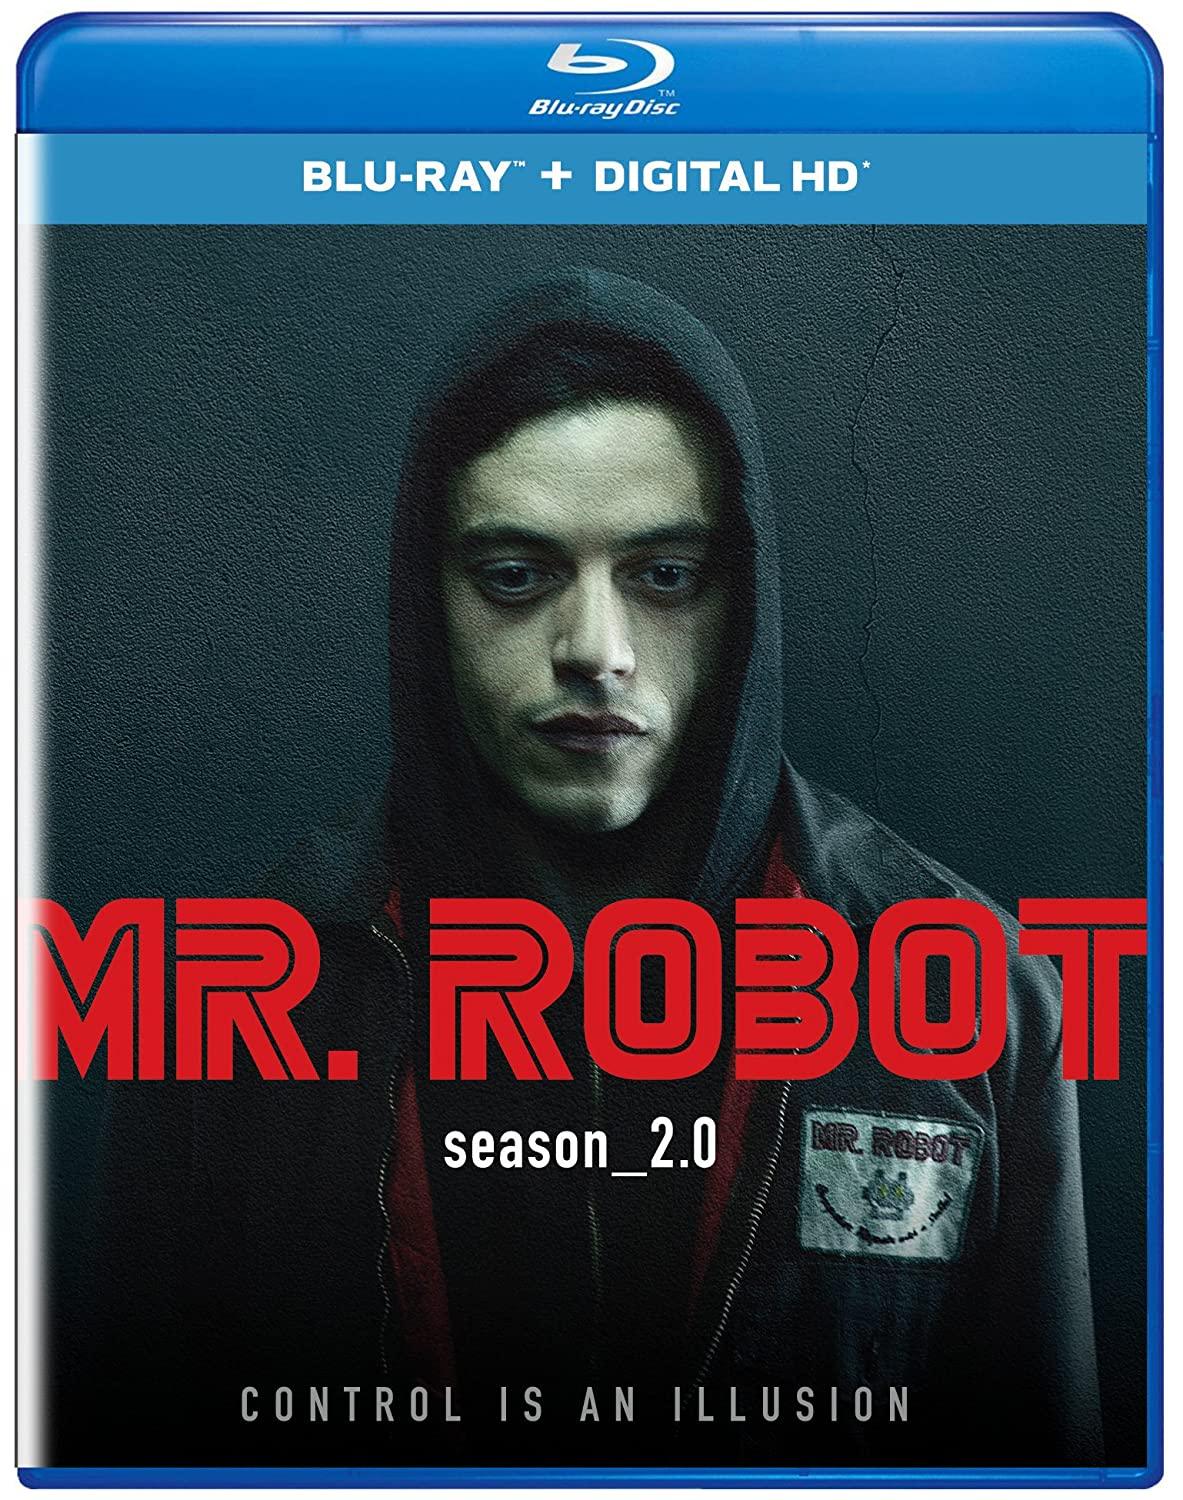 Mr. Robot Season 2.0 - DarksideRecords